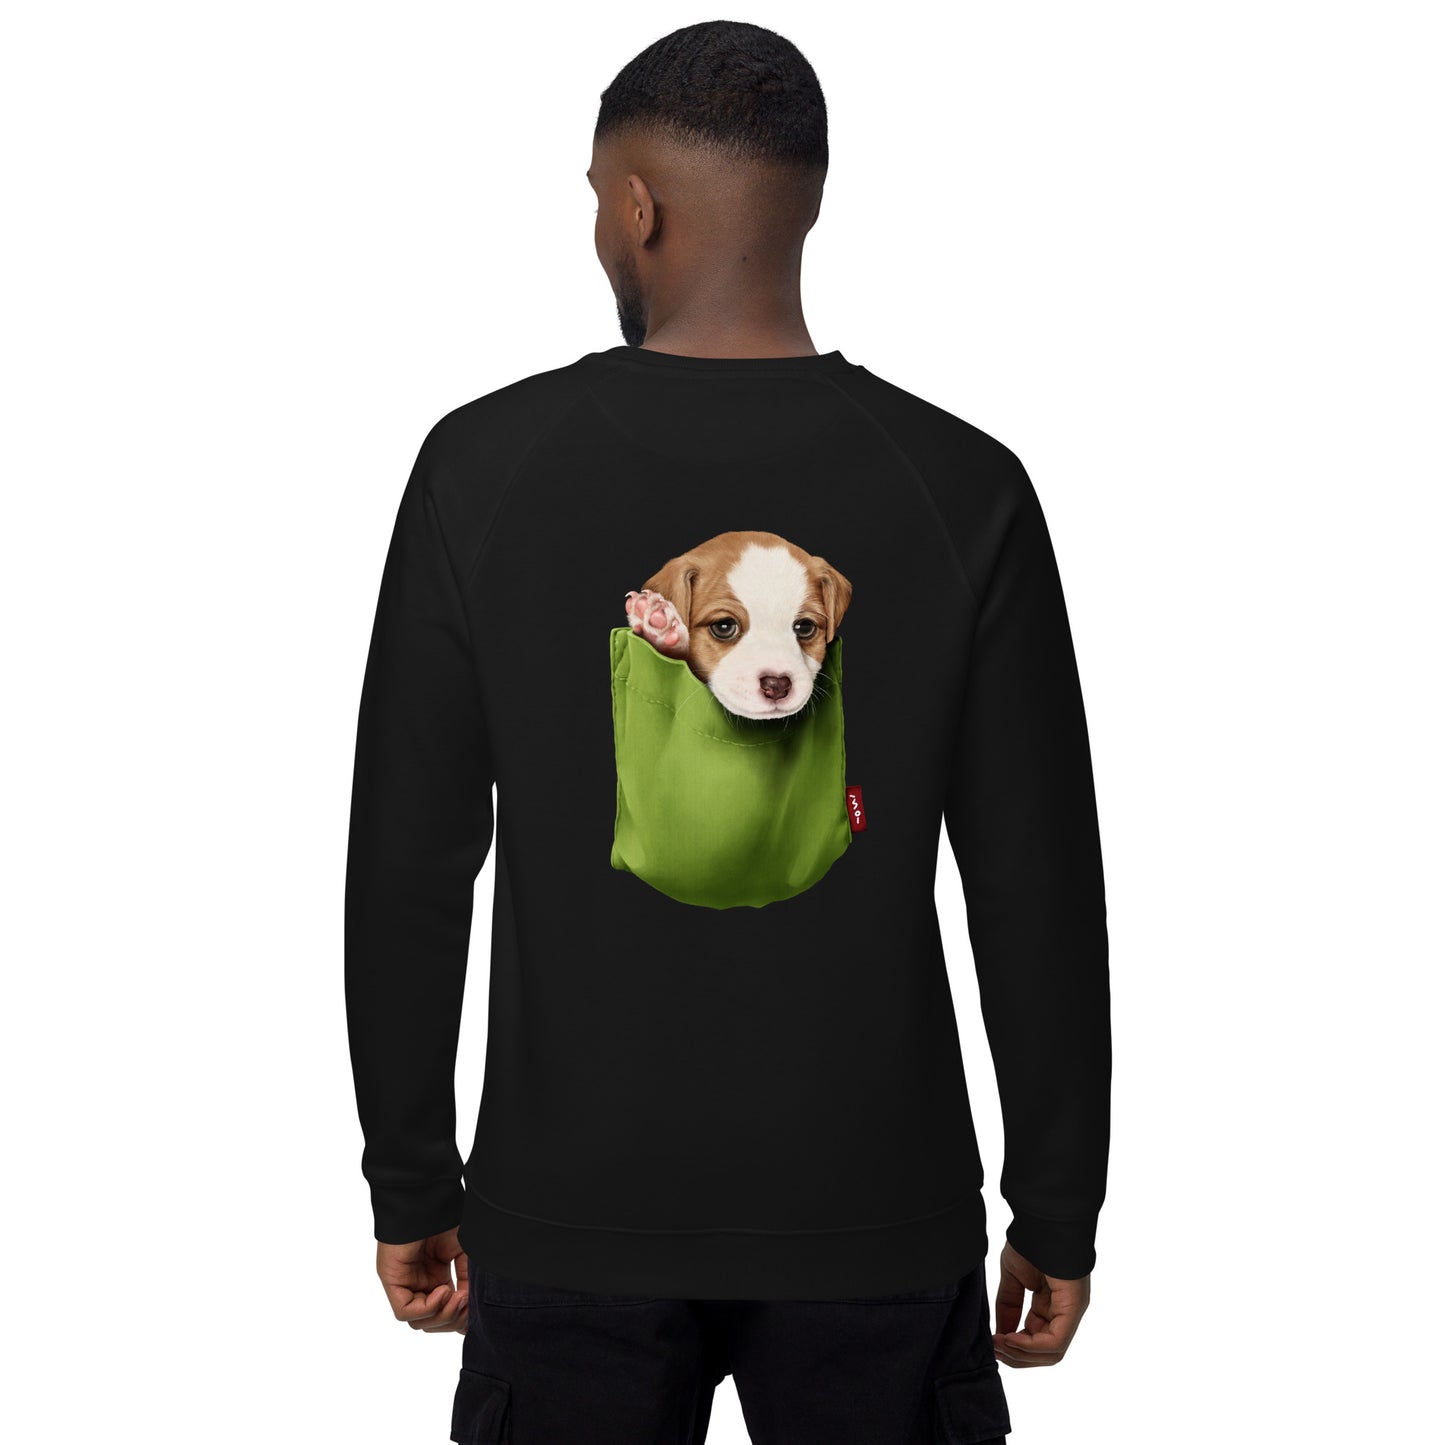 Jack Russell Terrier Unisex organic raglan sweatshirt